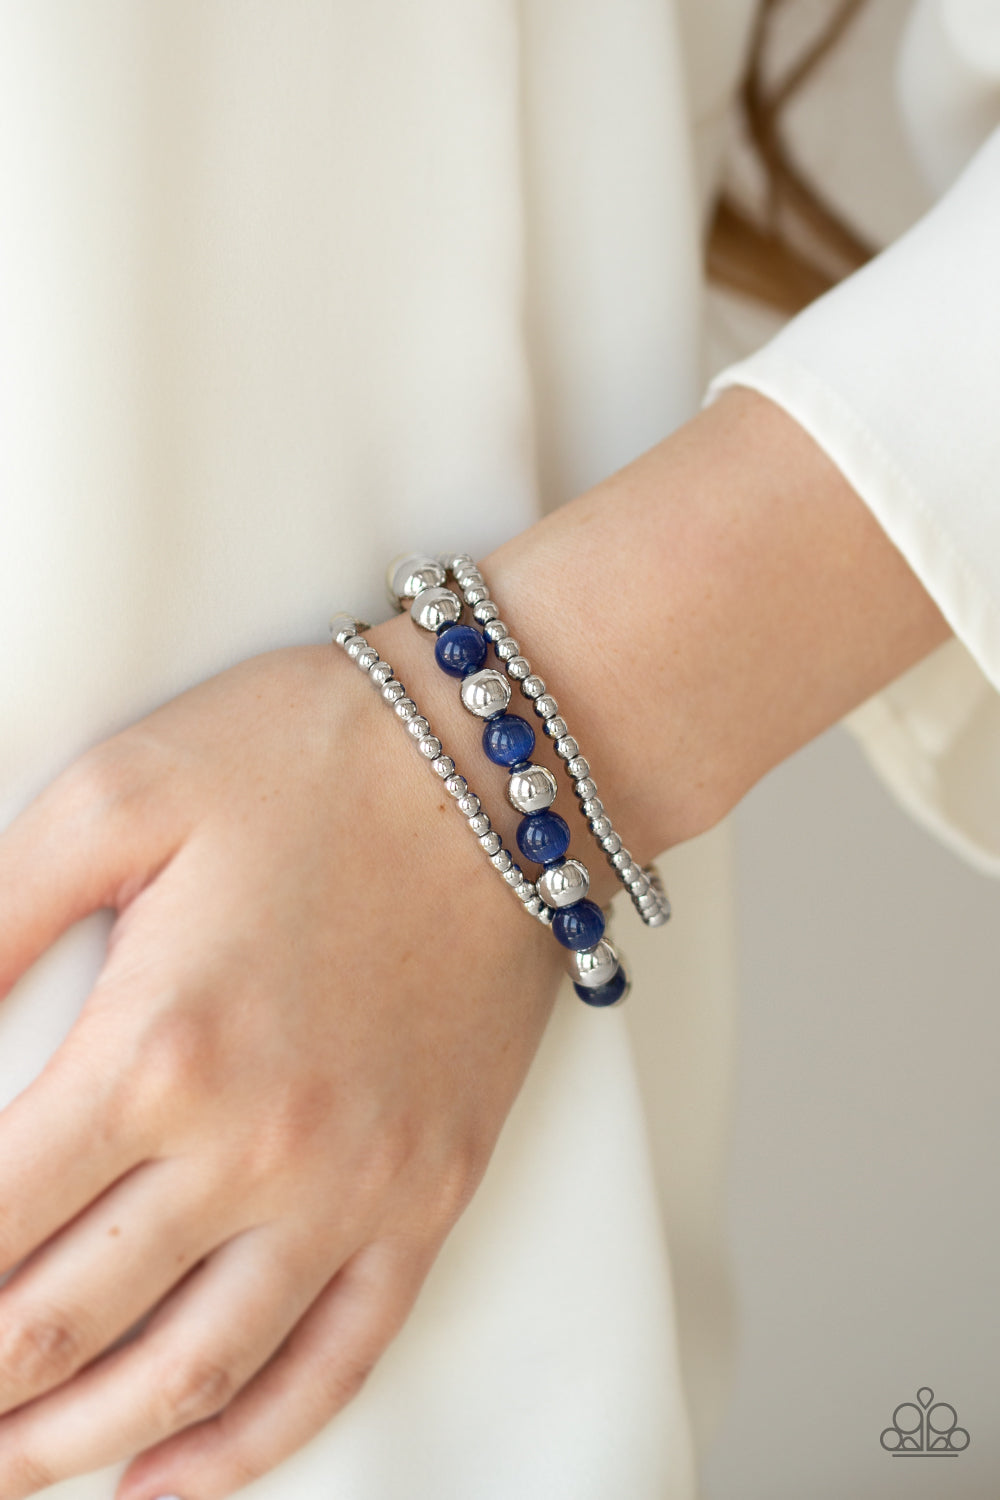 Go With The GLOW - Blue moonstone bracelet